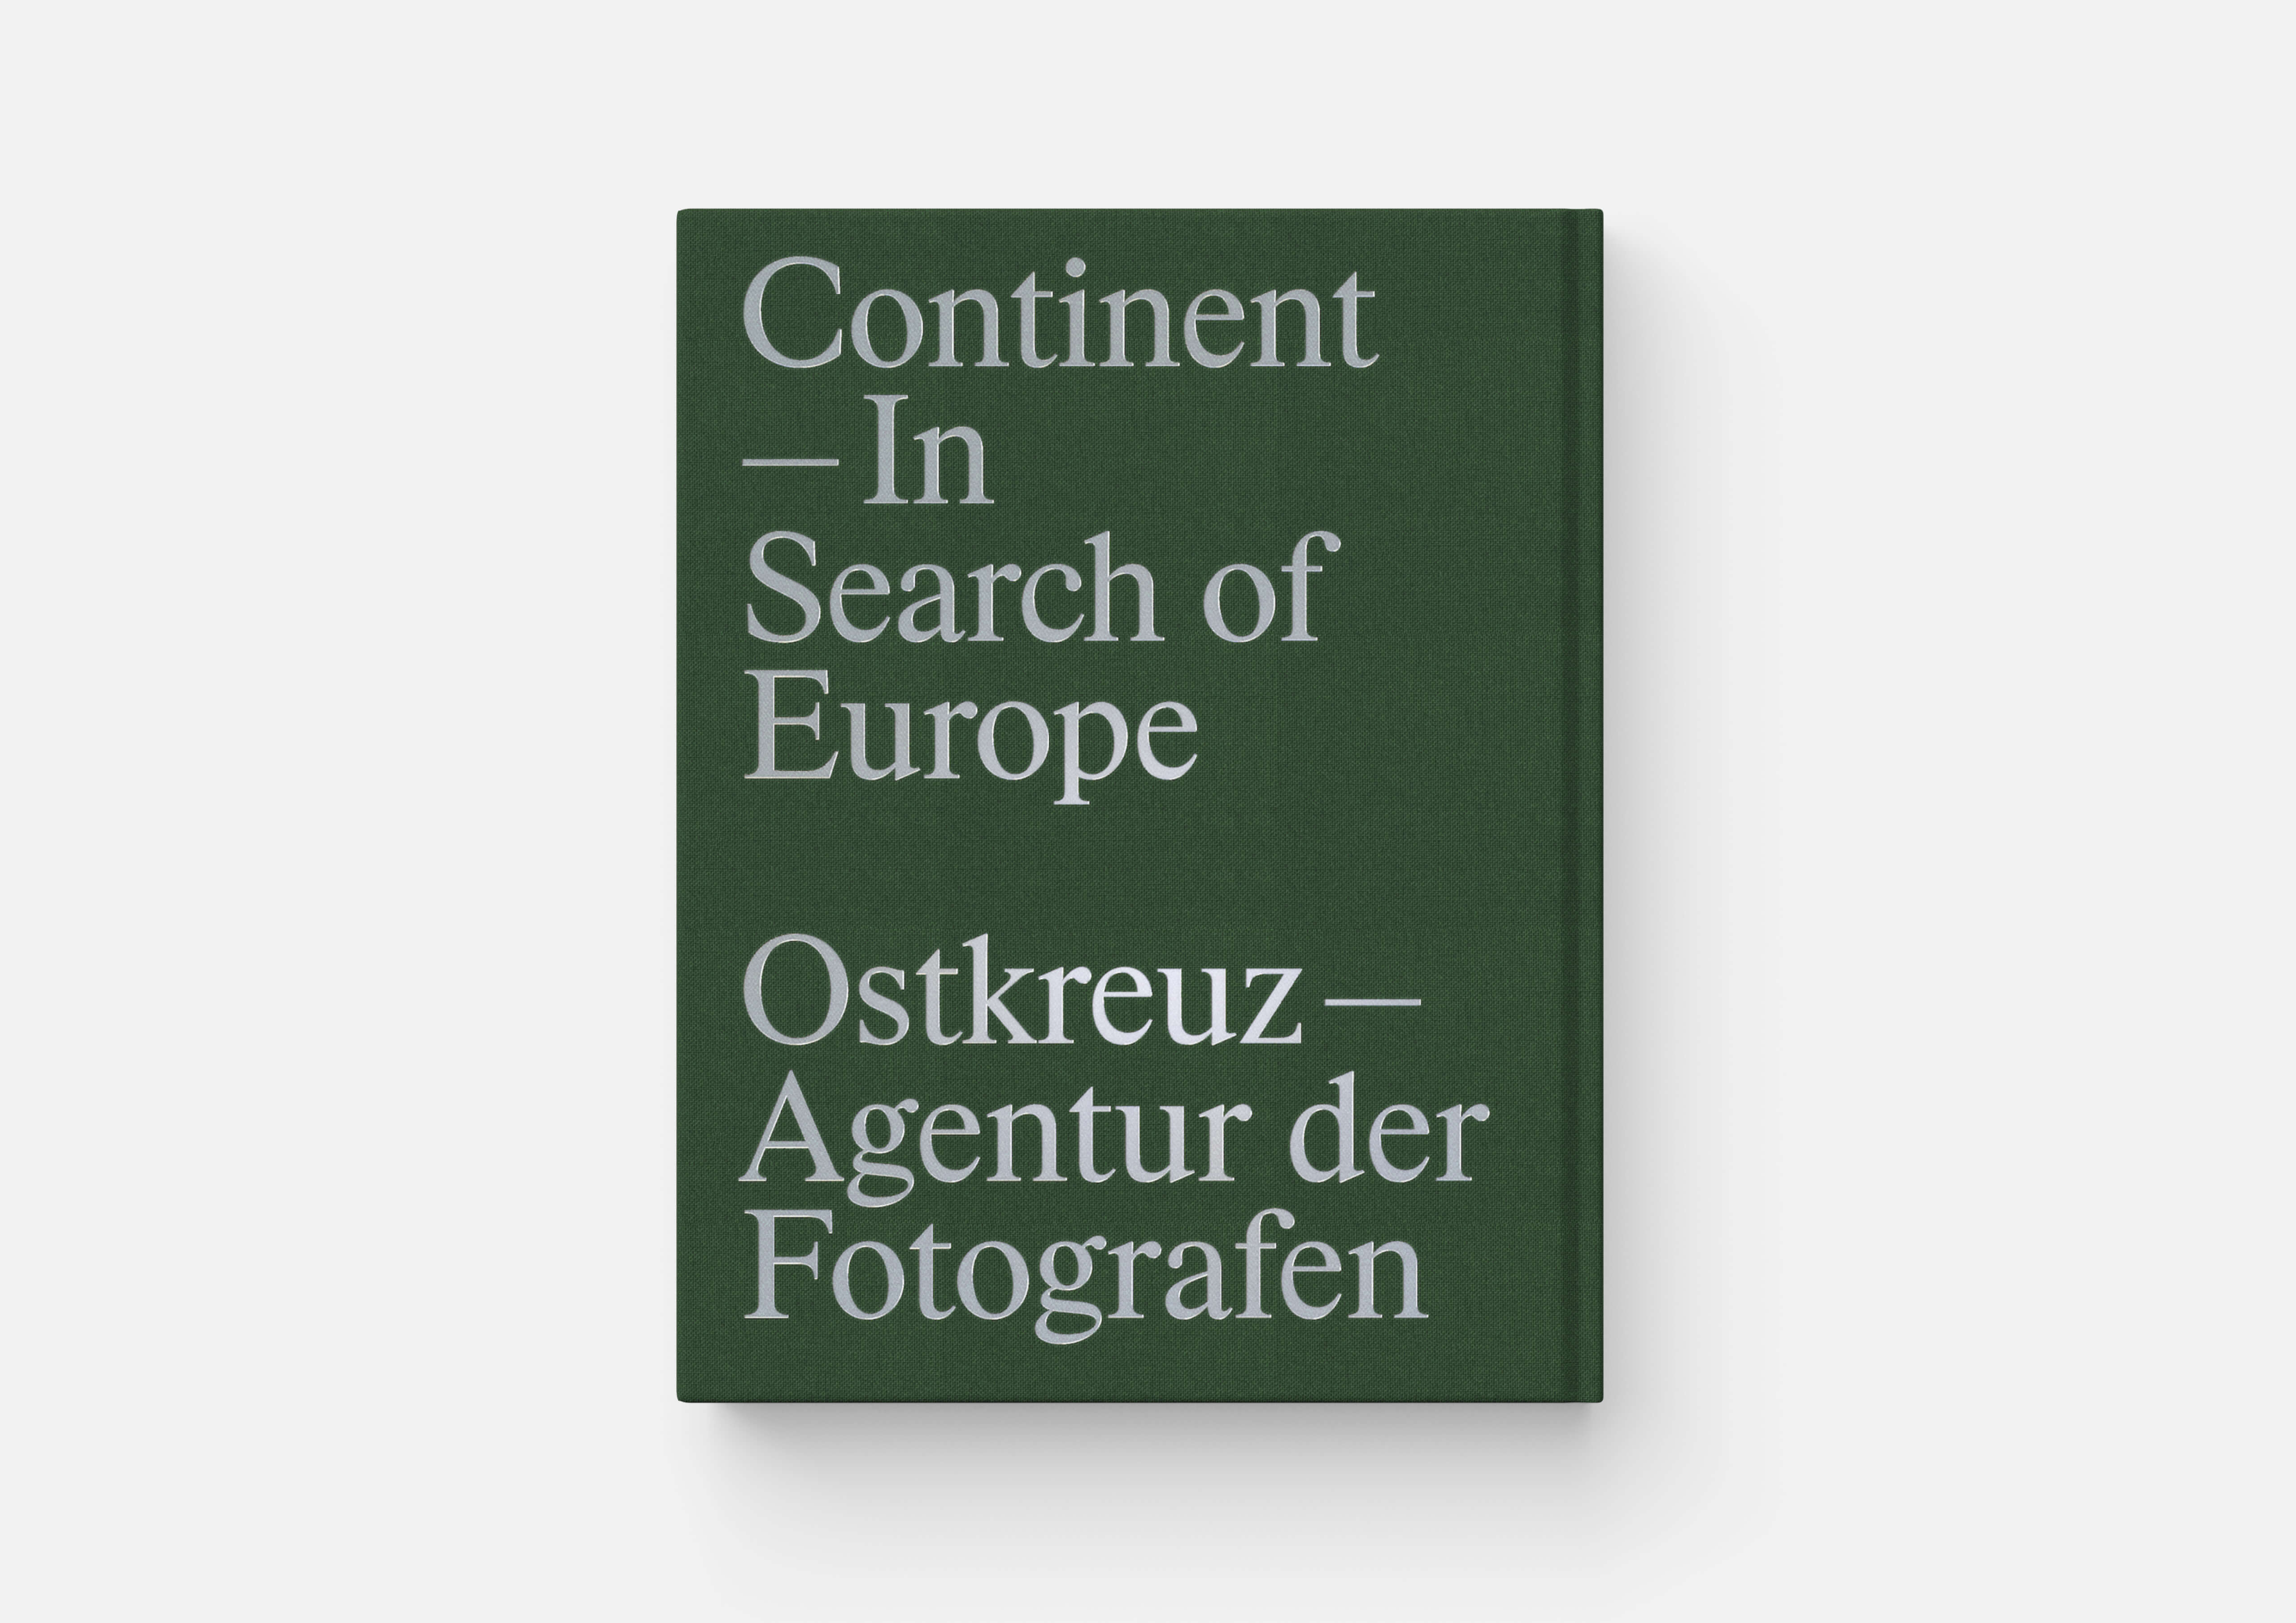 https://neuegestaltung.de/media/pages/clients/ostkreuz-kontinent/13230a88c6-1710174146/1_ostkreuz-kont-cover-back.jpg